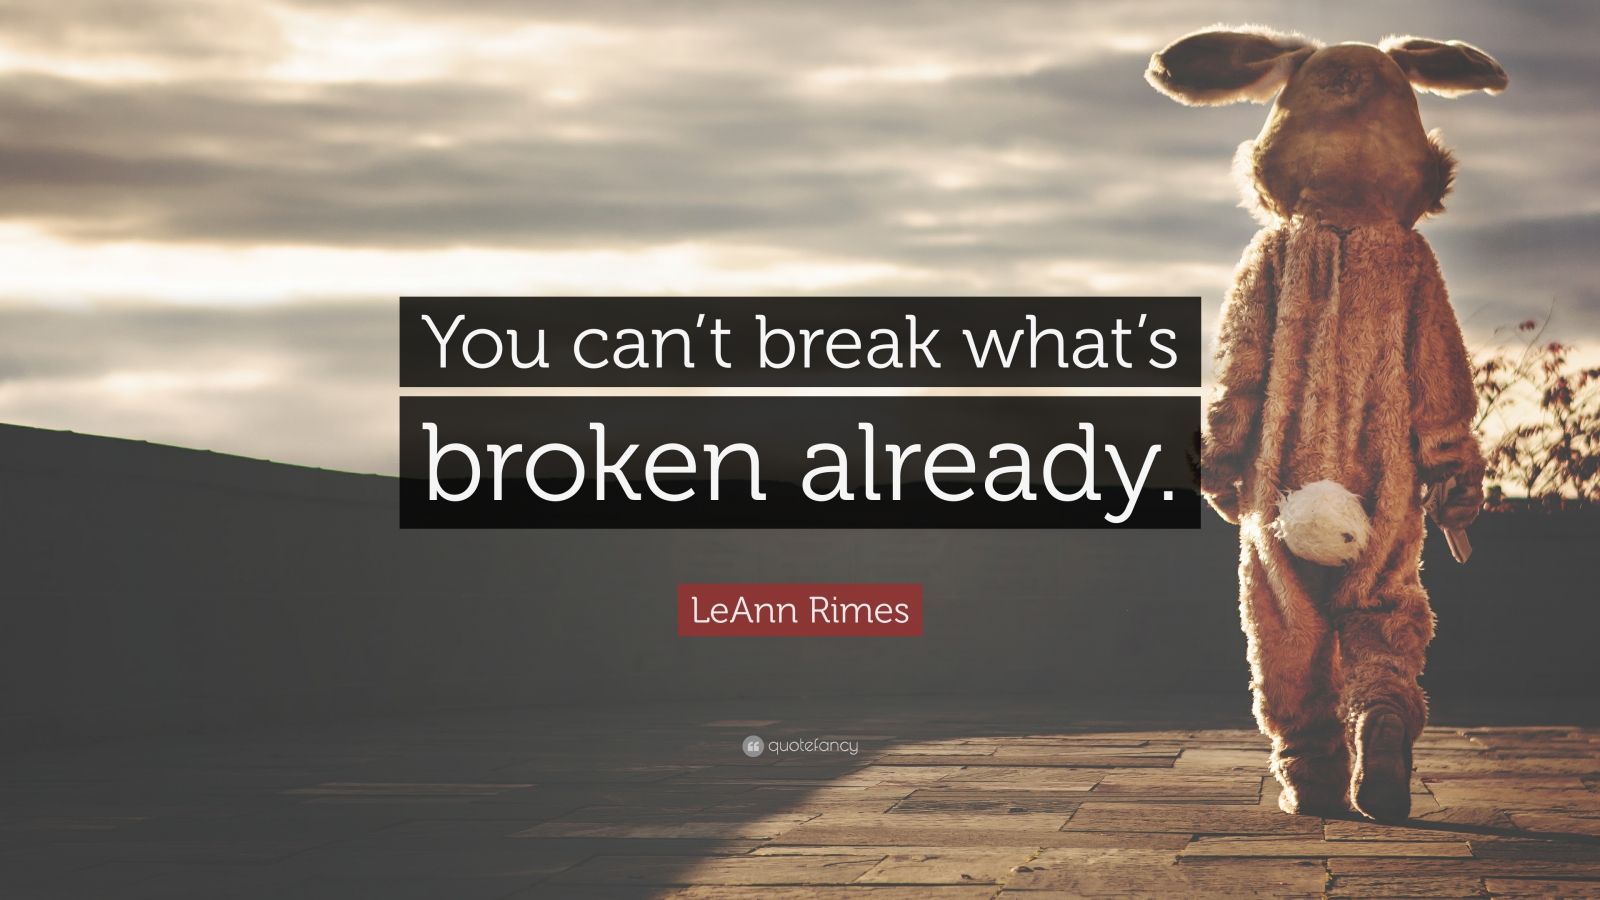 LeAnn Rimes Quote “You can’t break what’s broken already.” (9